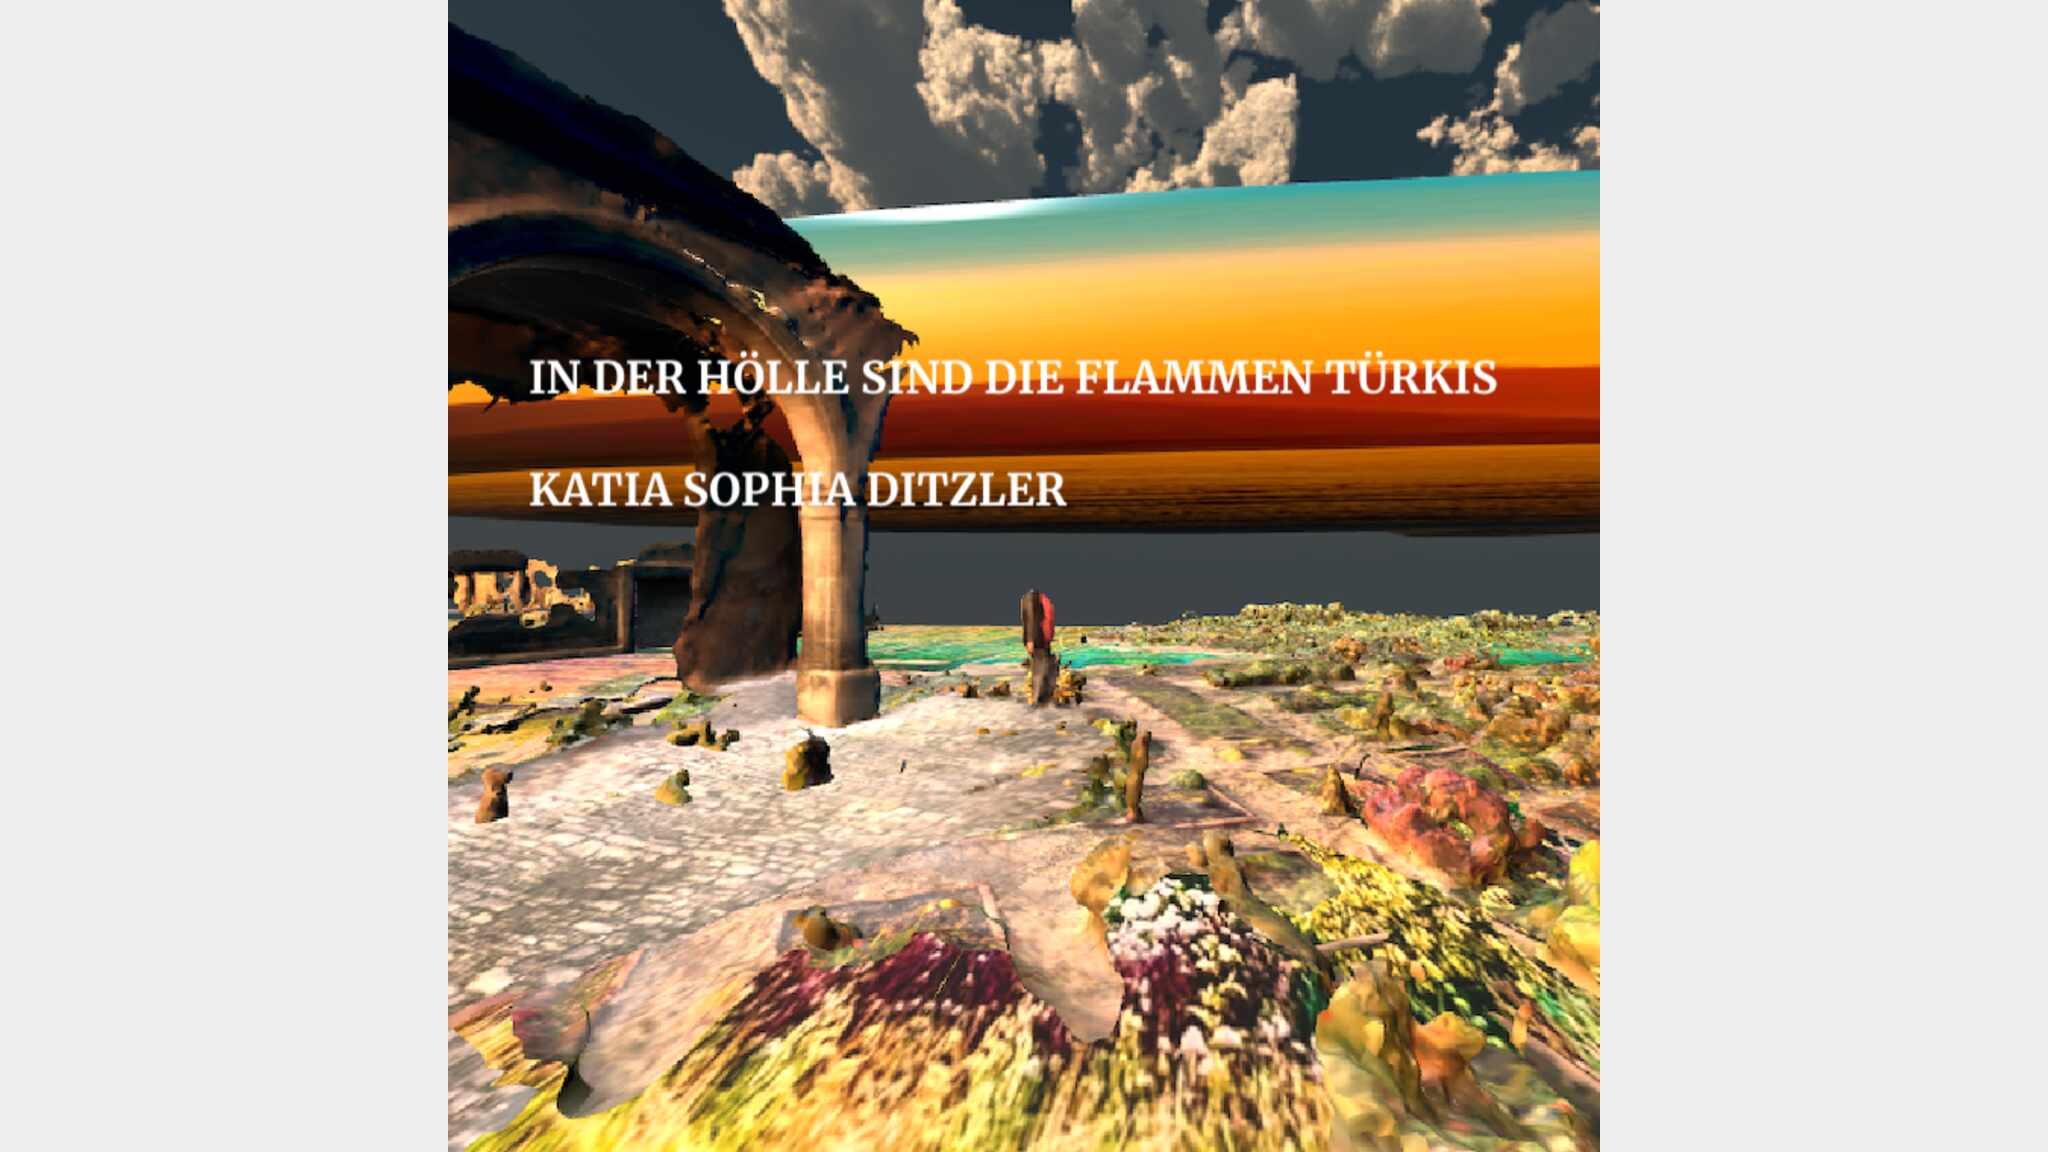 IN DER HÖLLE SIND DIE FLAMMEN TÜRKIS/IN HELL THE FLAMES ARE TURQUOISE